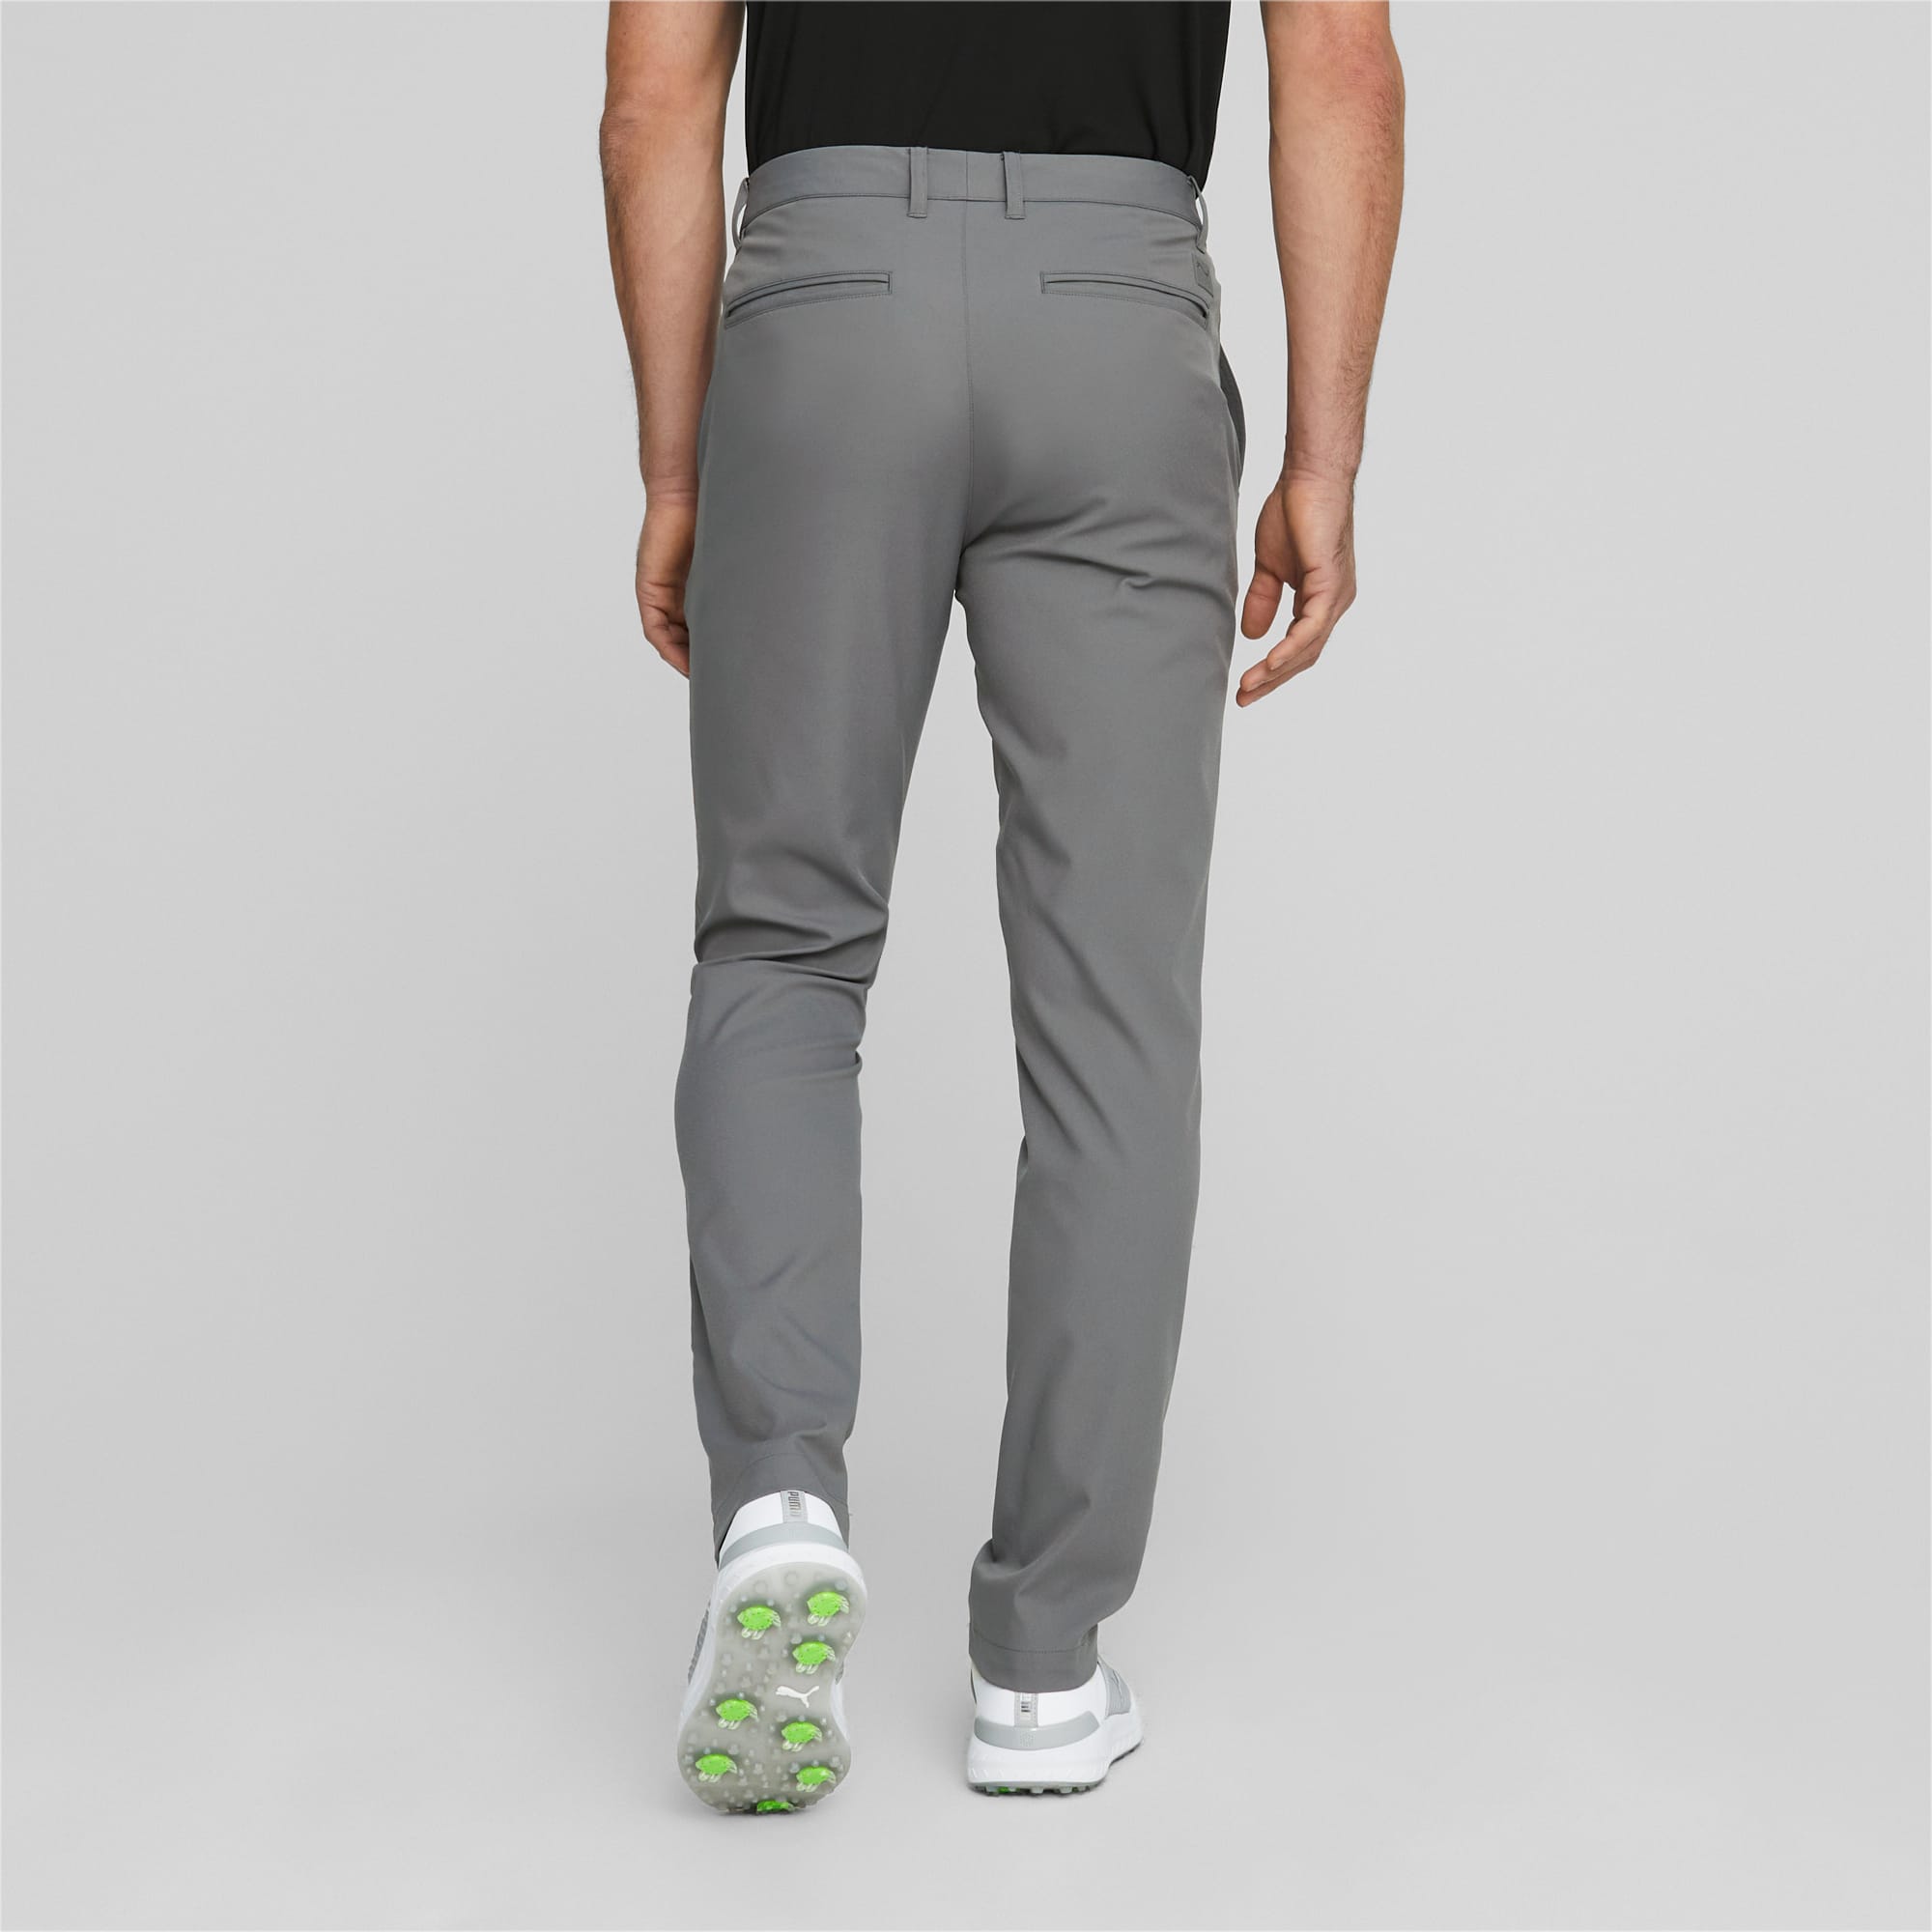 PUMA Dealer Tailored Golf Pants Men, Slate Sky, Size 35/36, Clothing